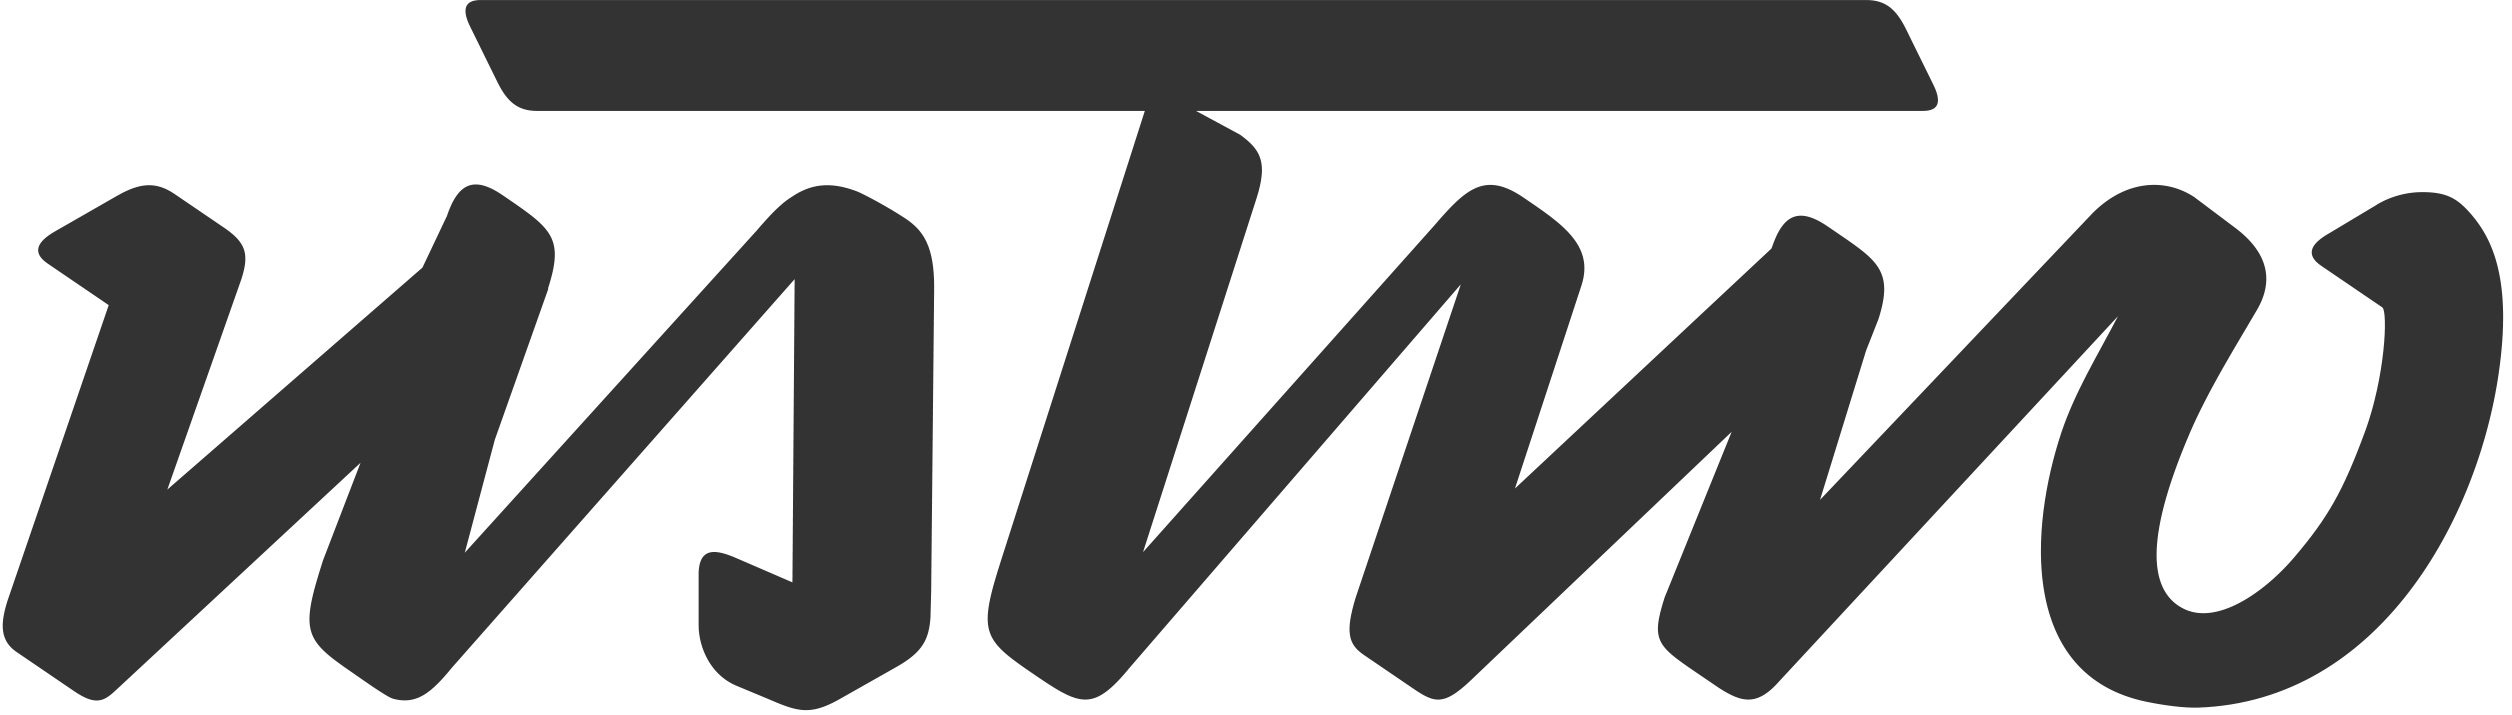 ustwo-logo.png